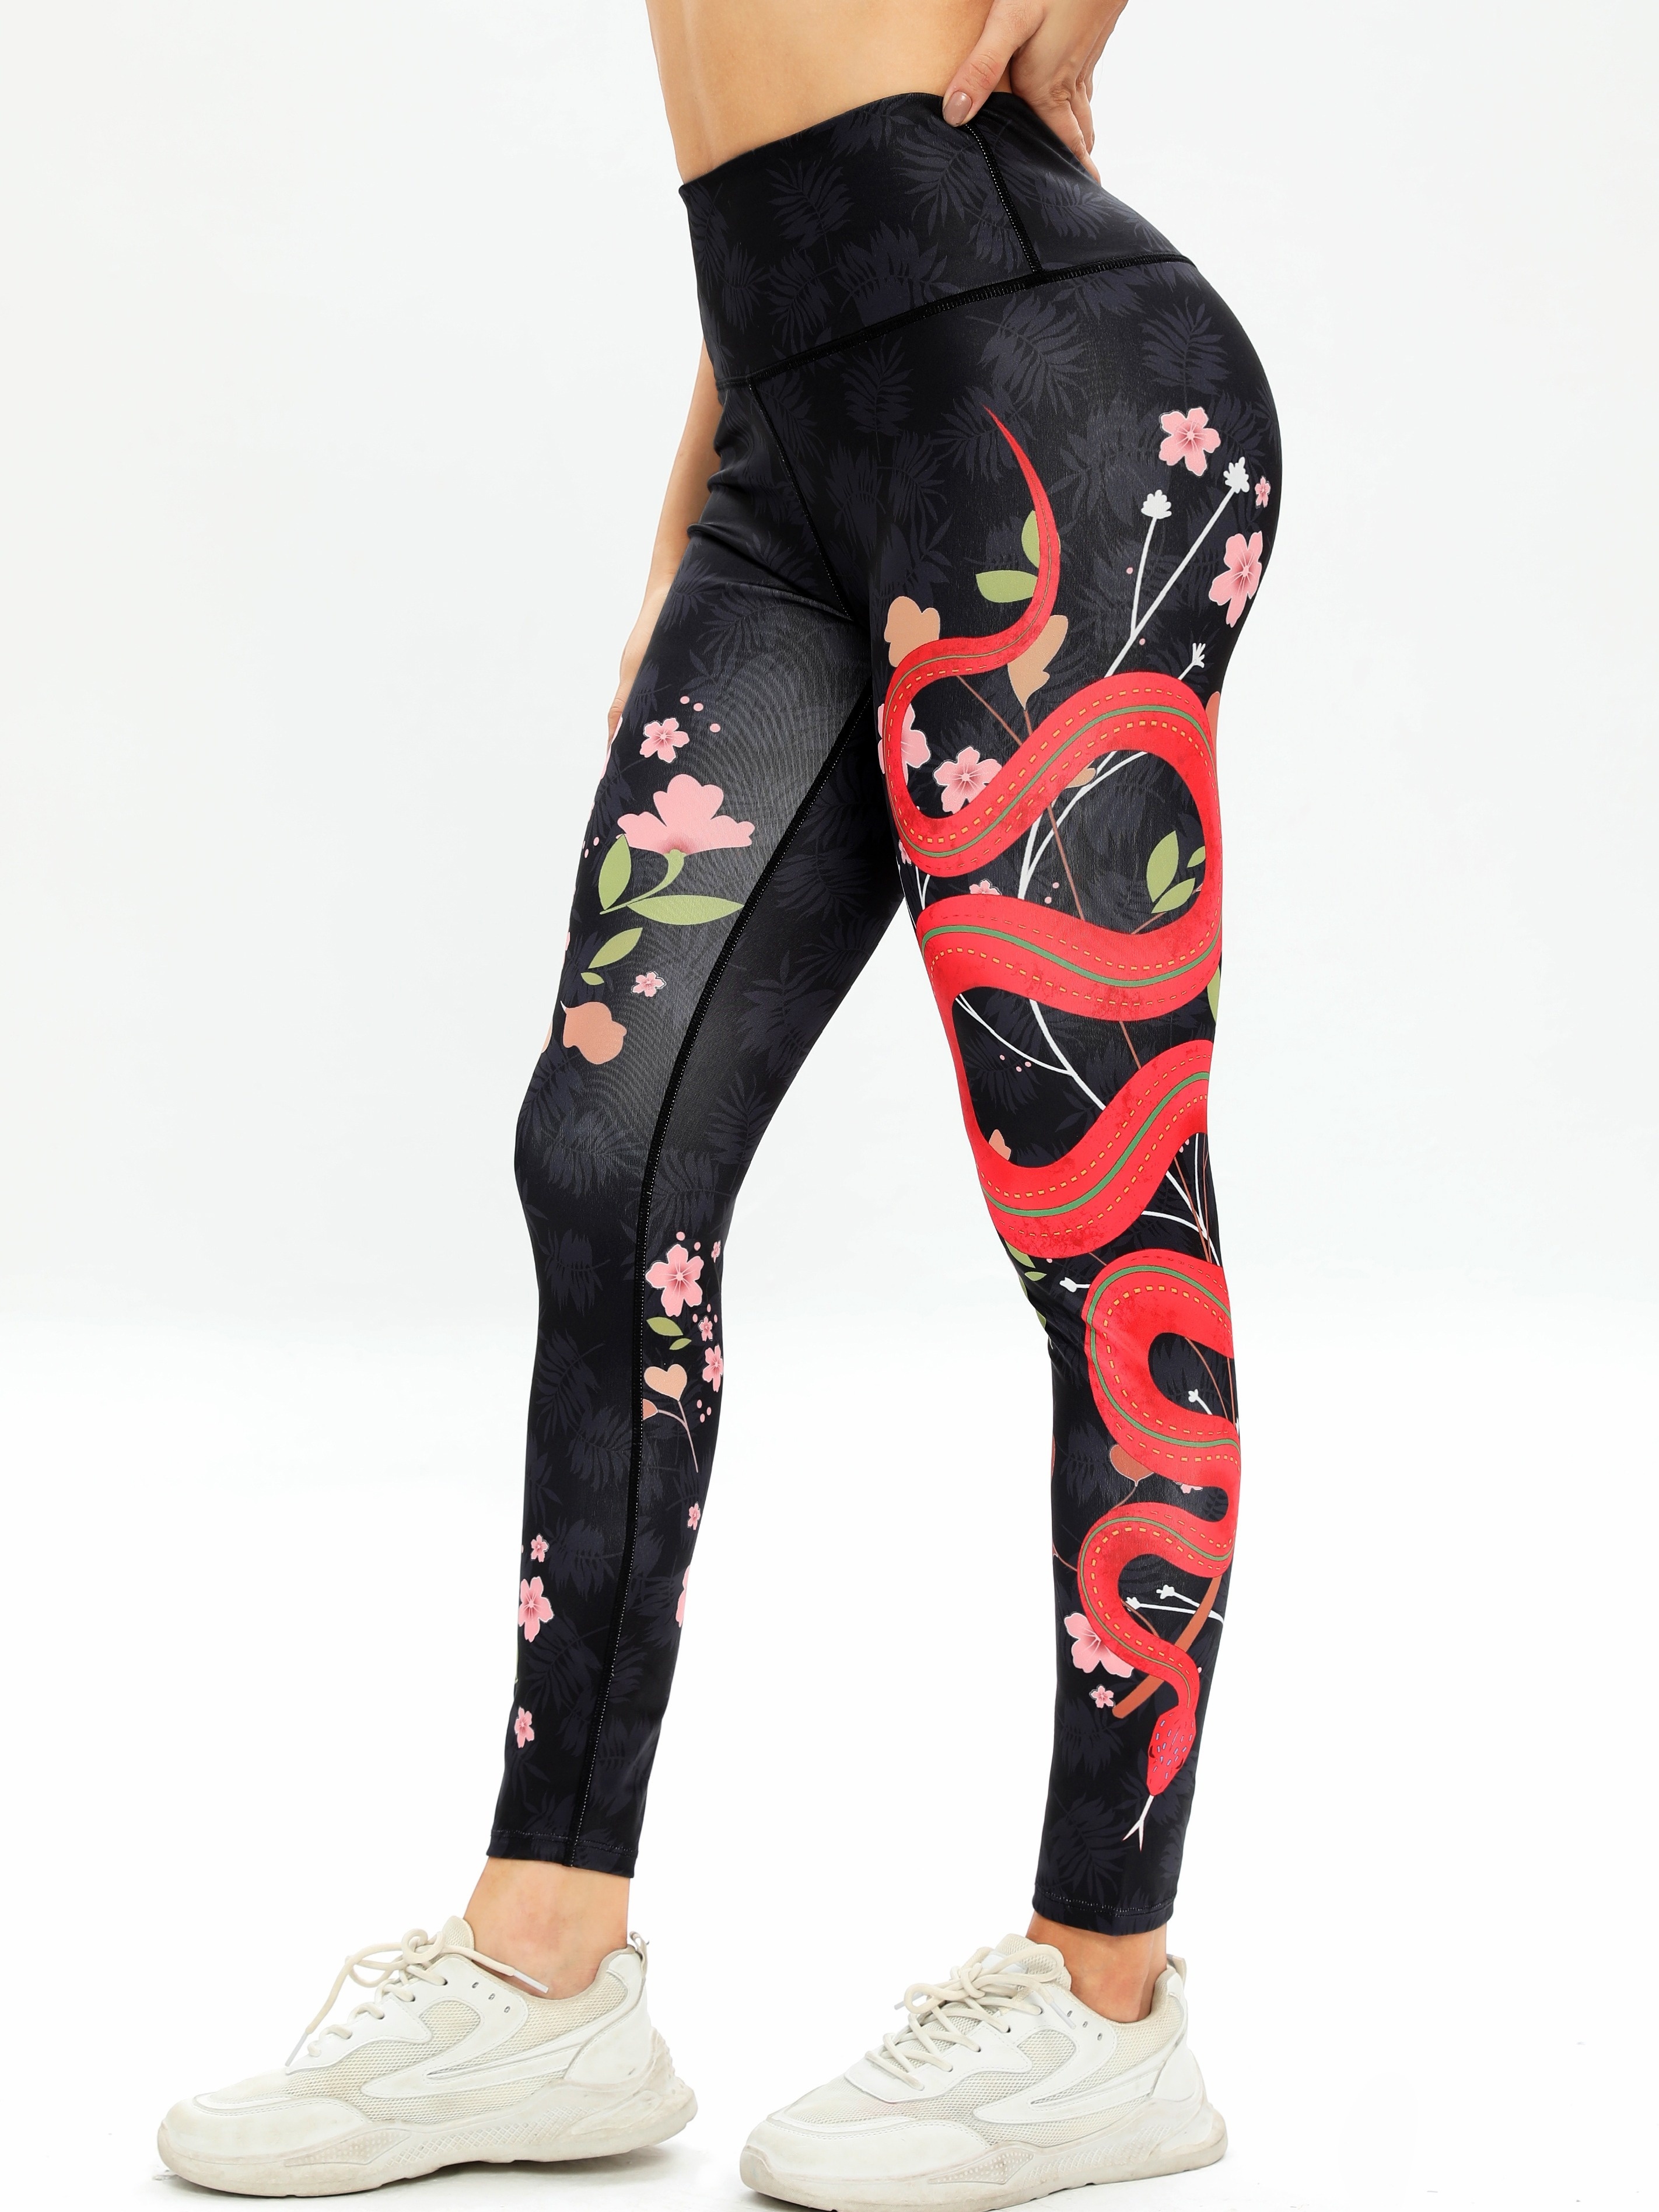 Snake Skin Python Pattern Women's Yoga Pants with Pockets High